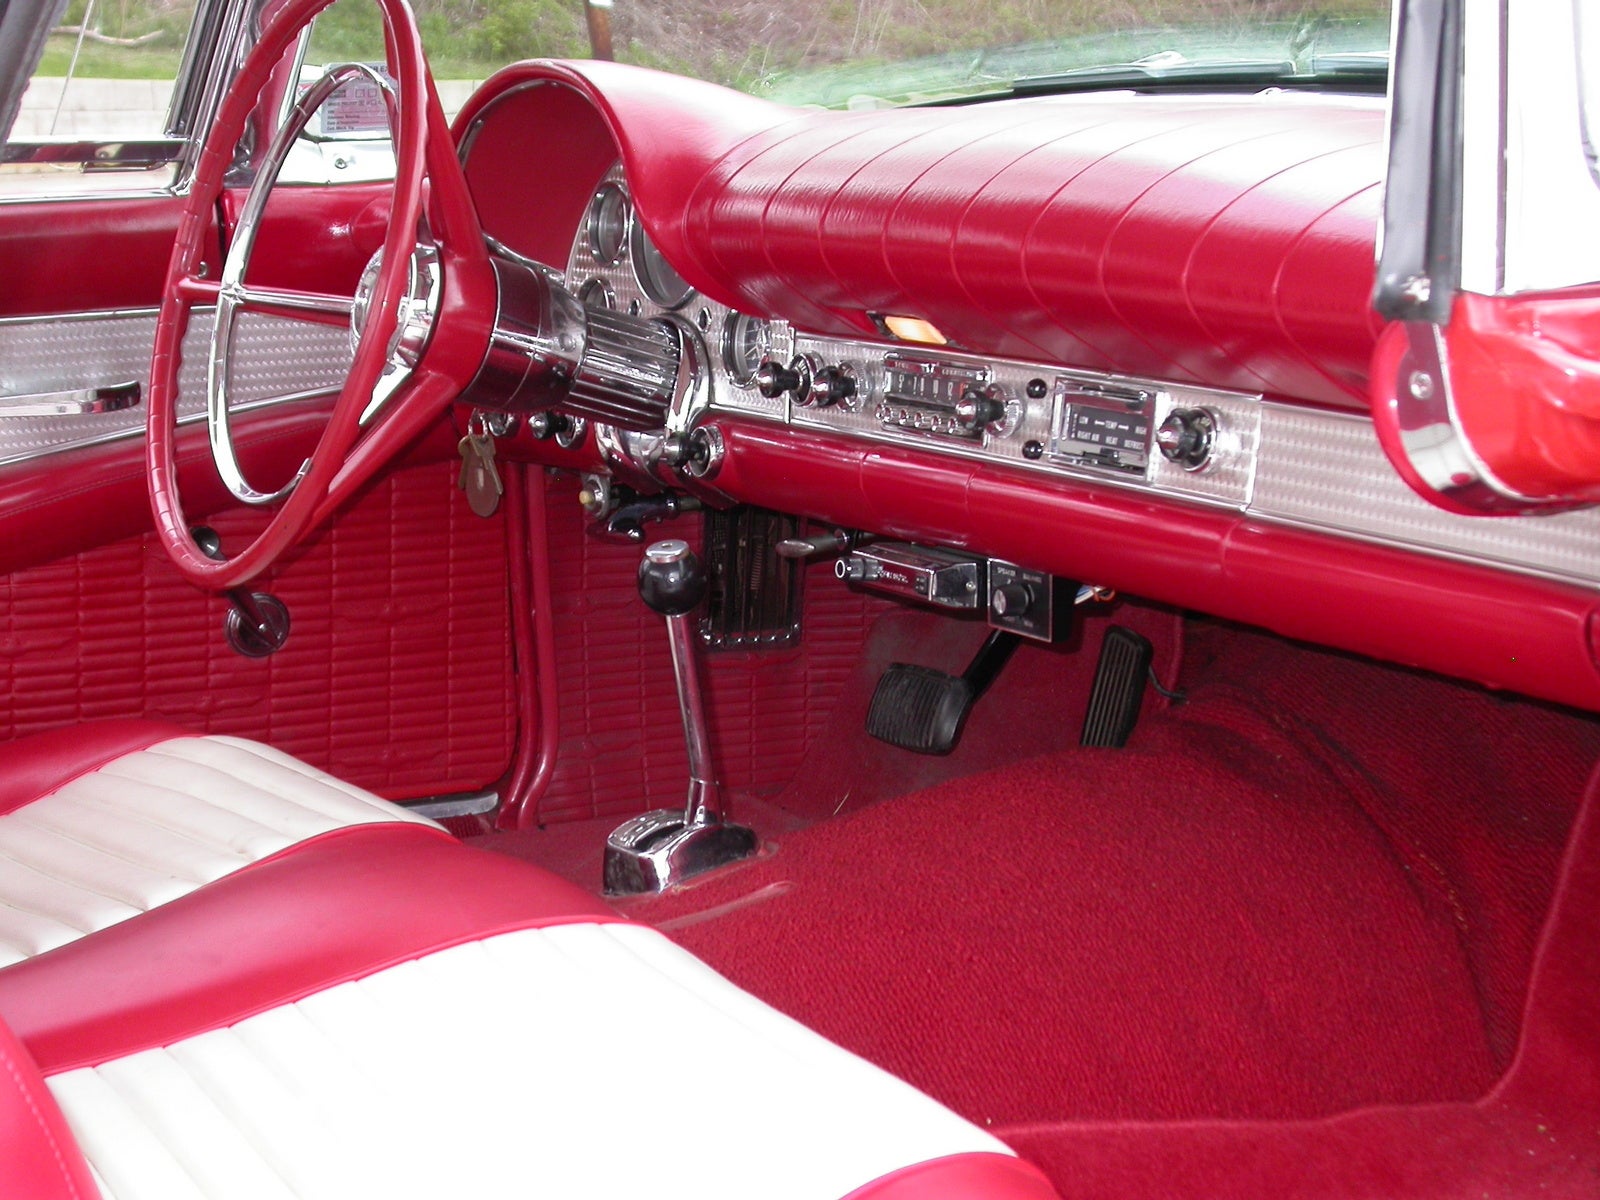 1957 Ford thunderbird interior colors #4